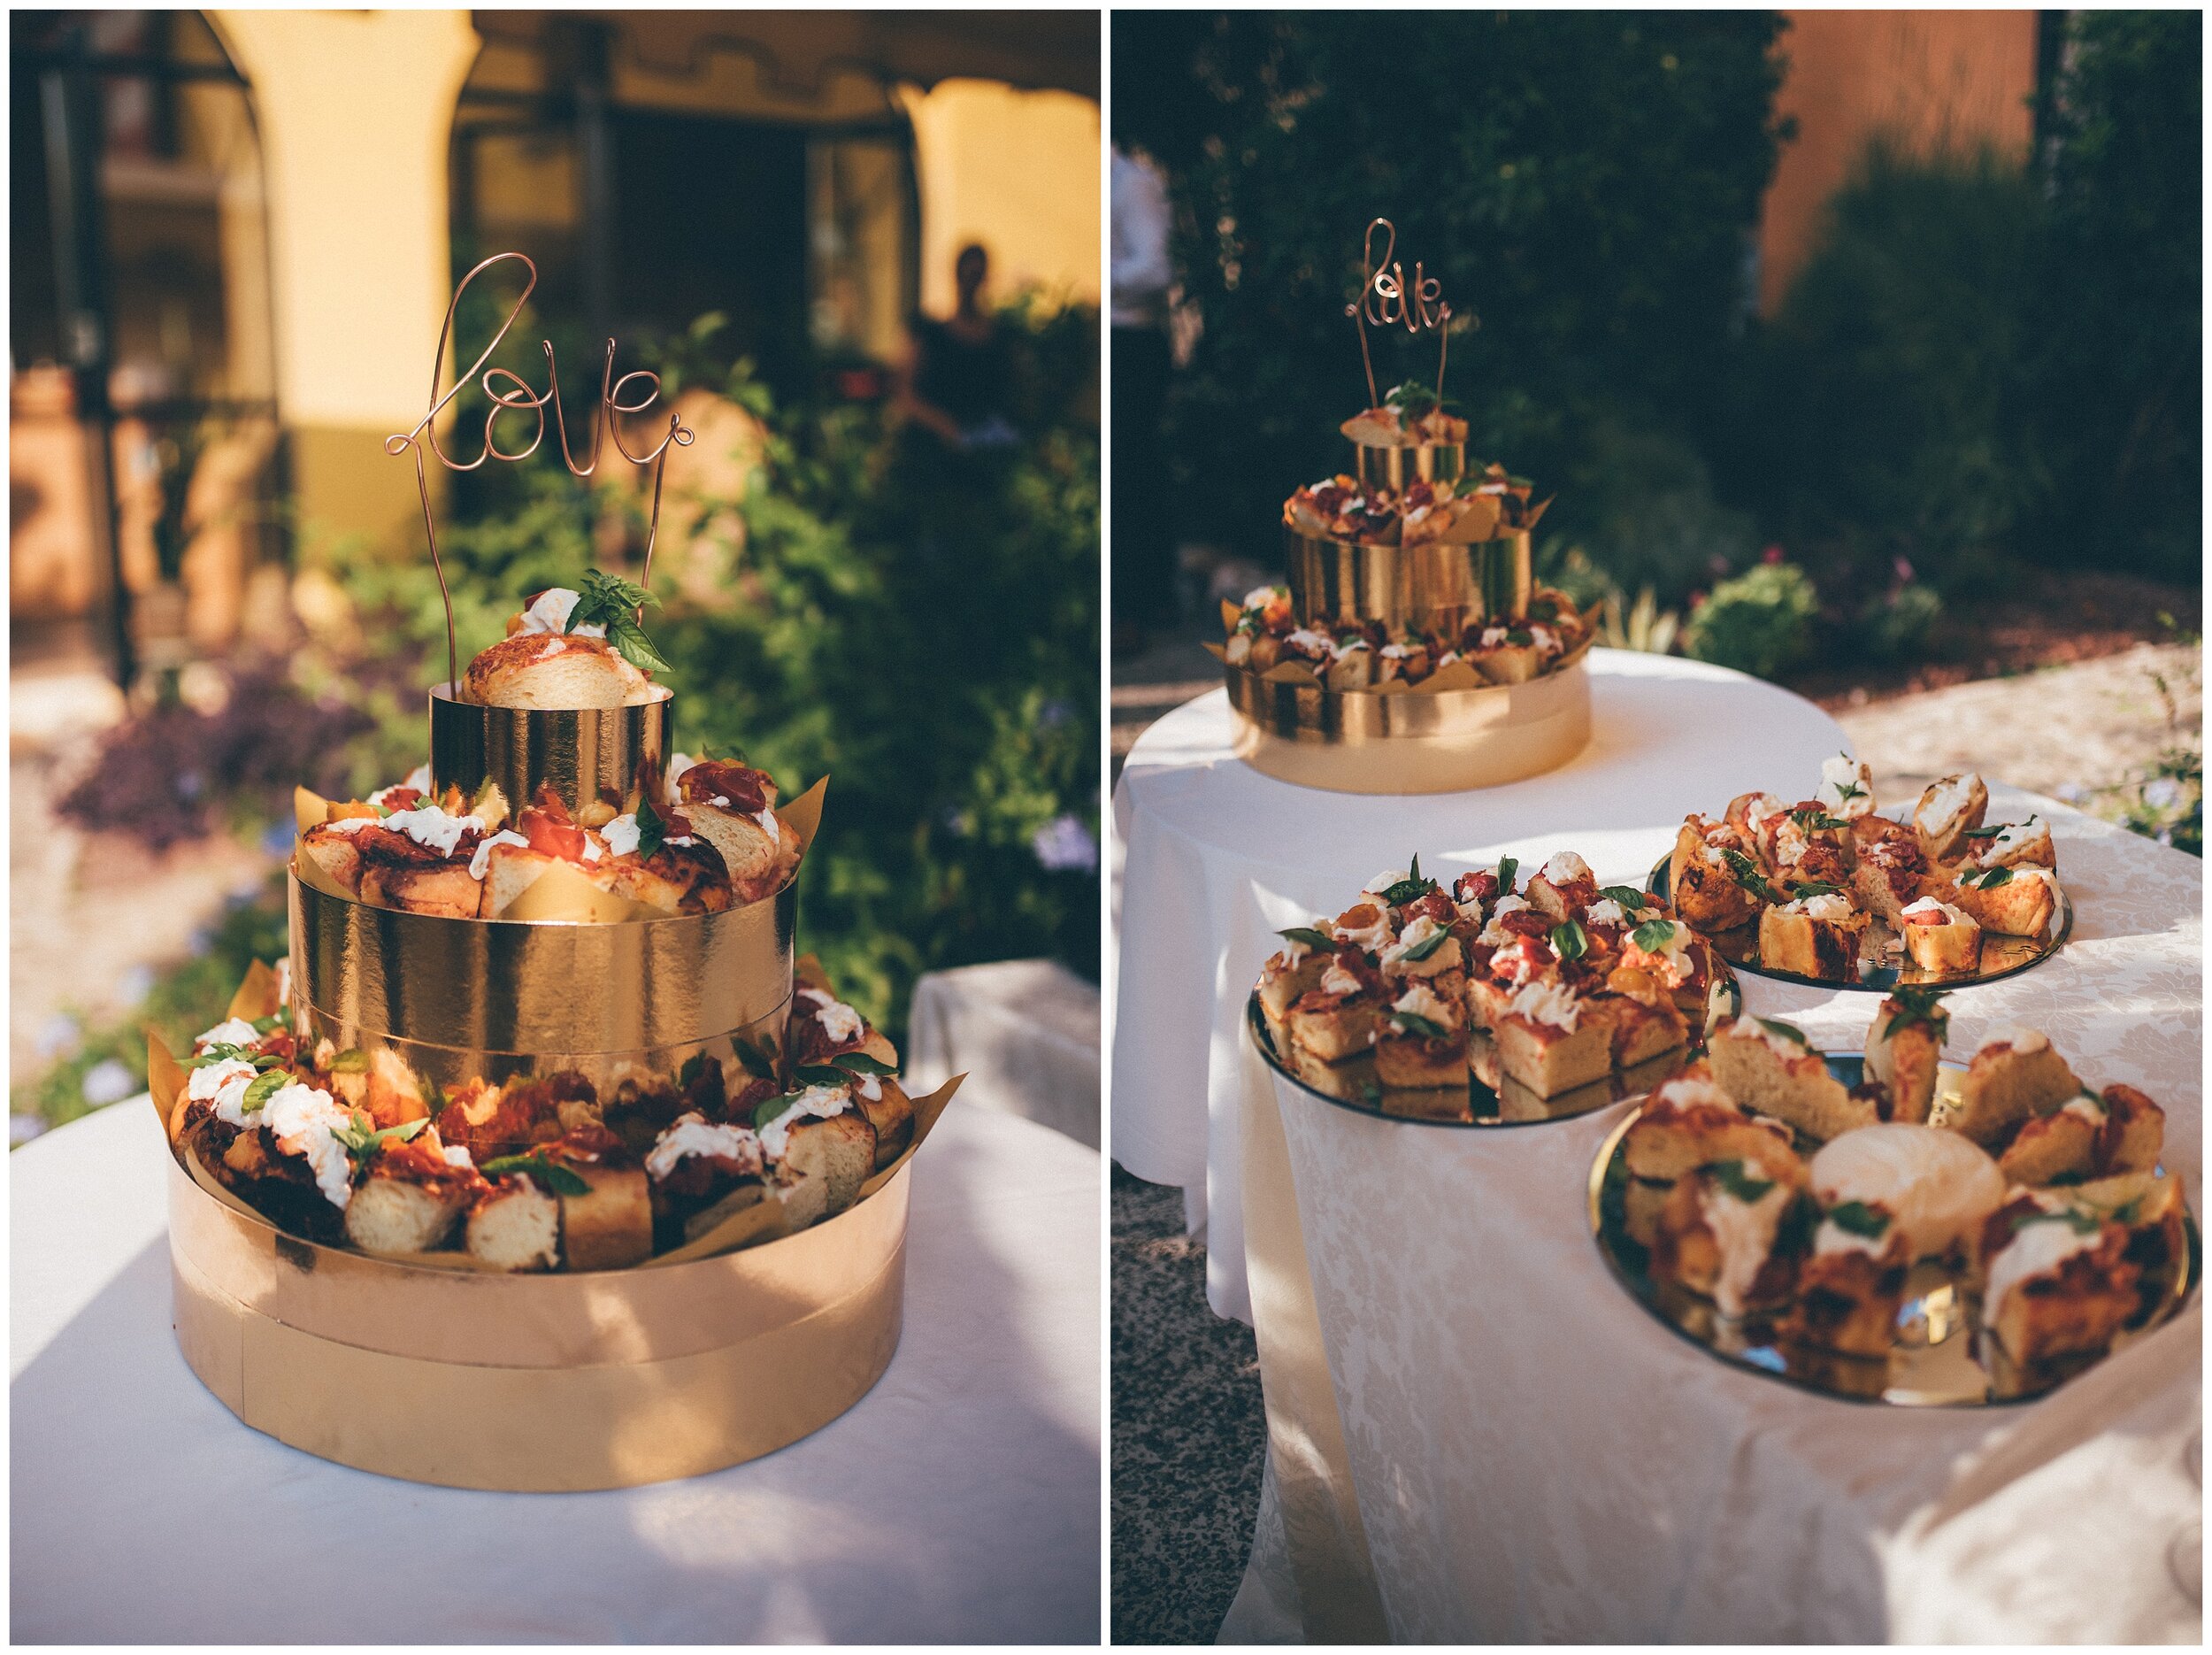 Pizza wedding cake at Destion wedding in Lake Garda by the staff at Agriturismo Villa Bissiniga, Lake Garda wedding venue.